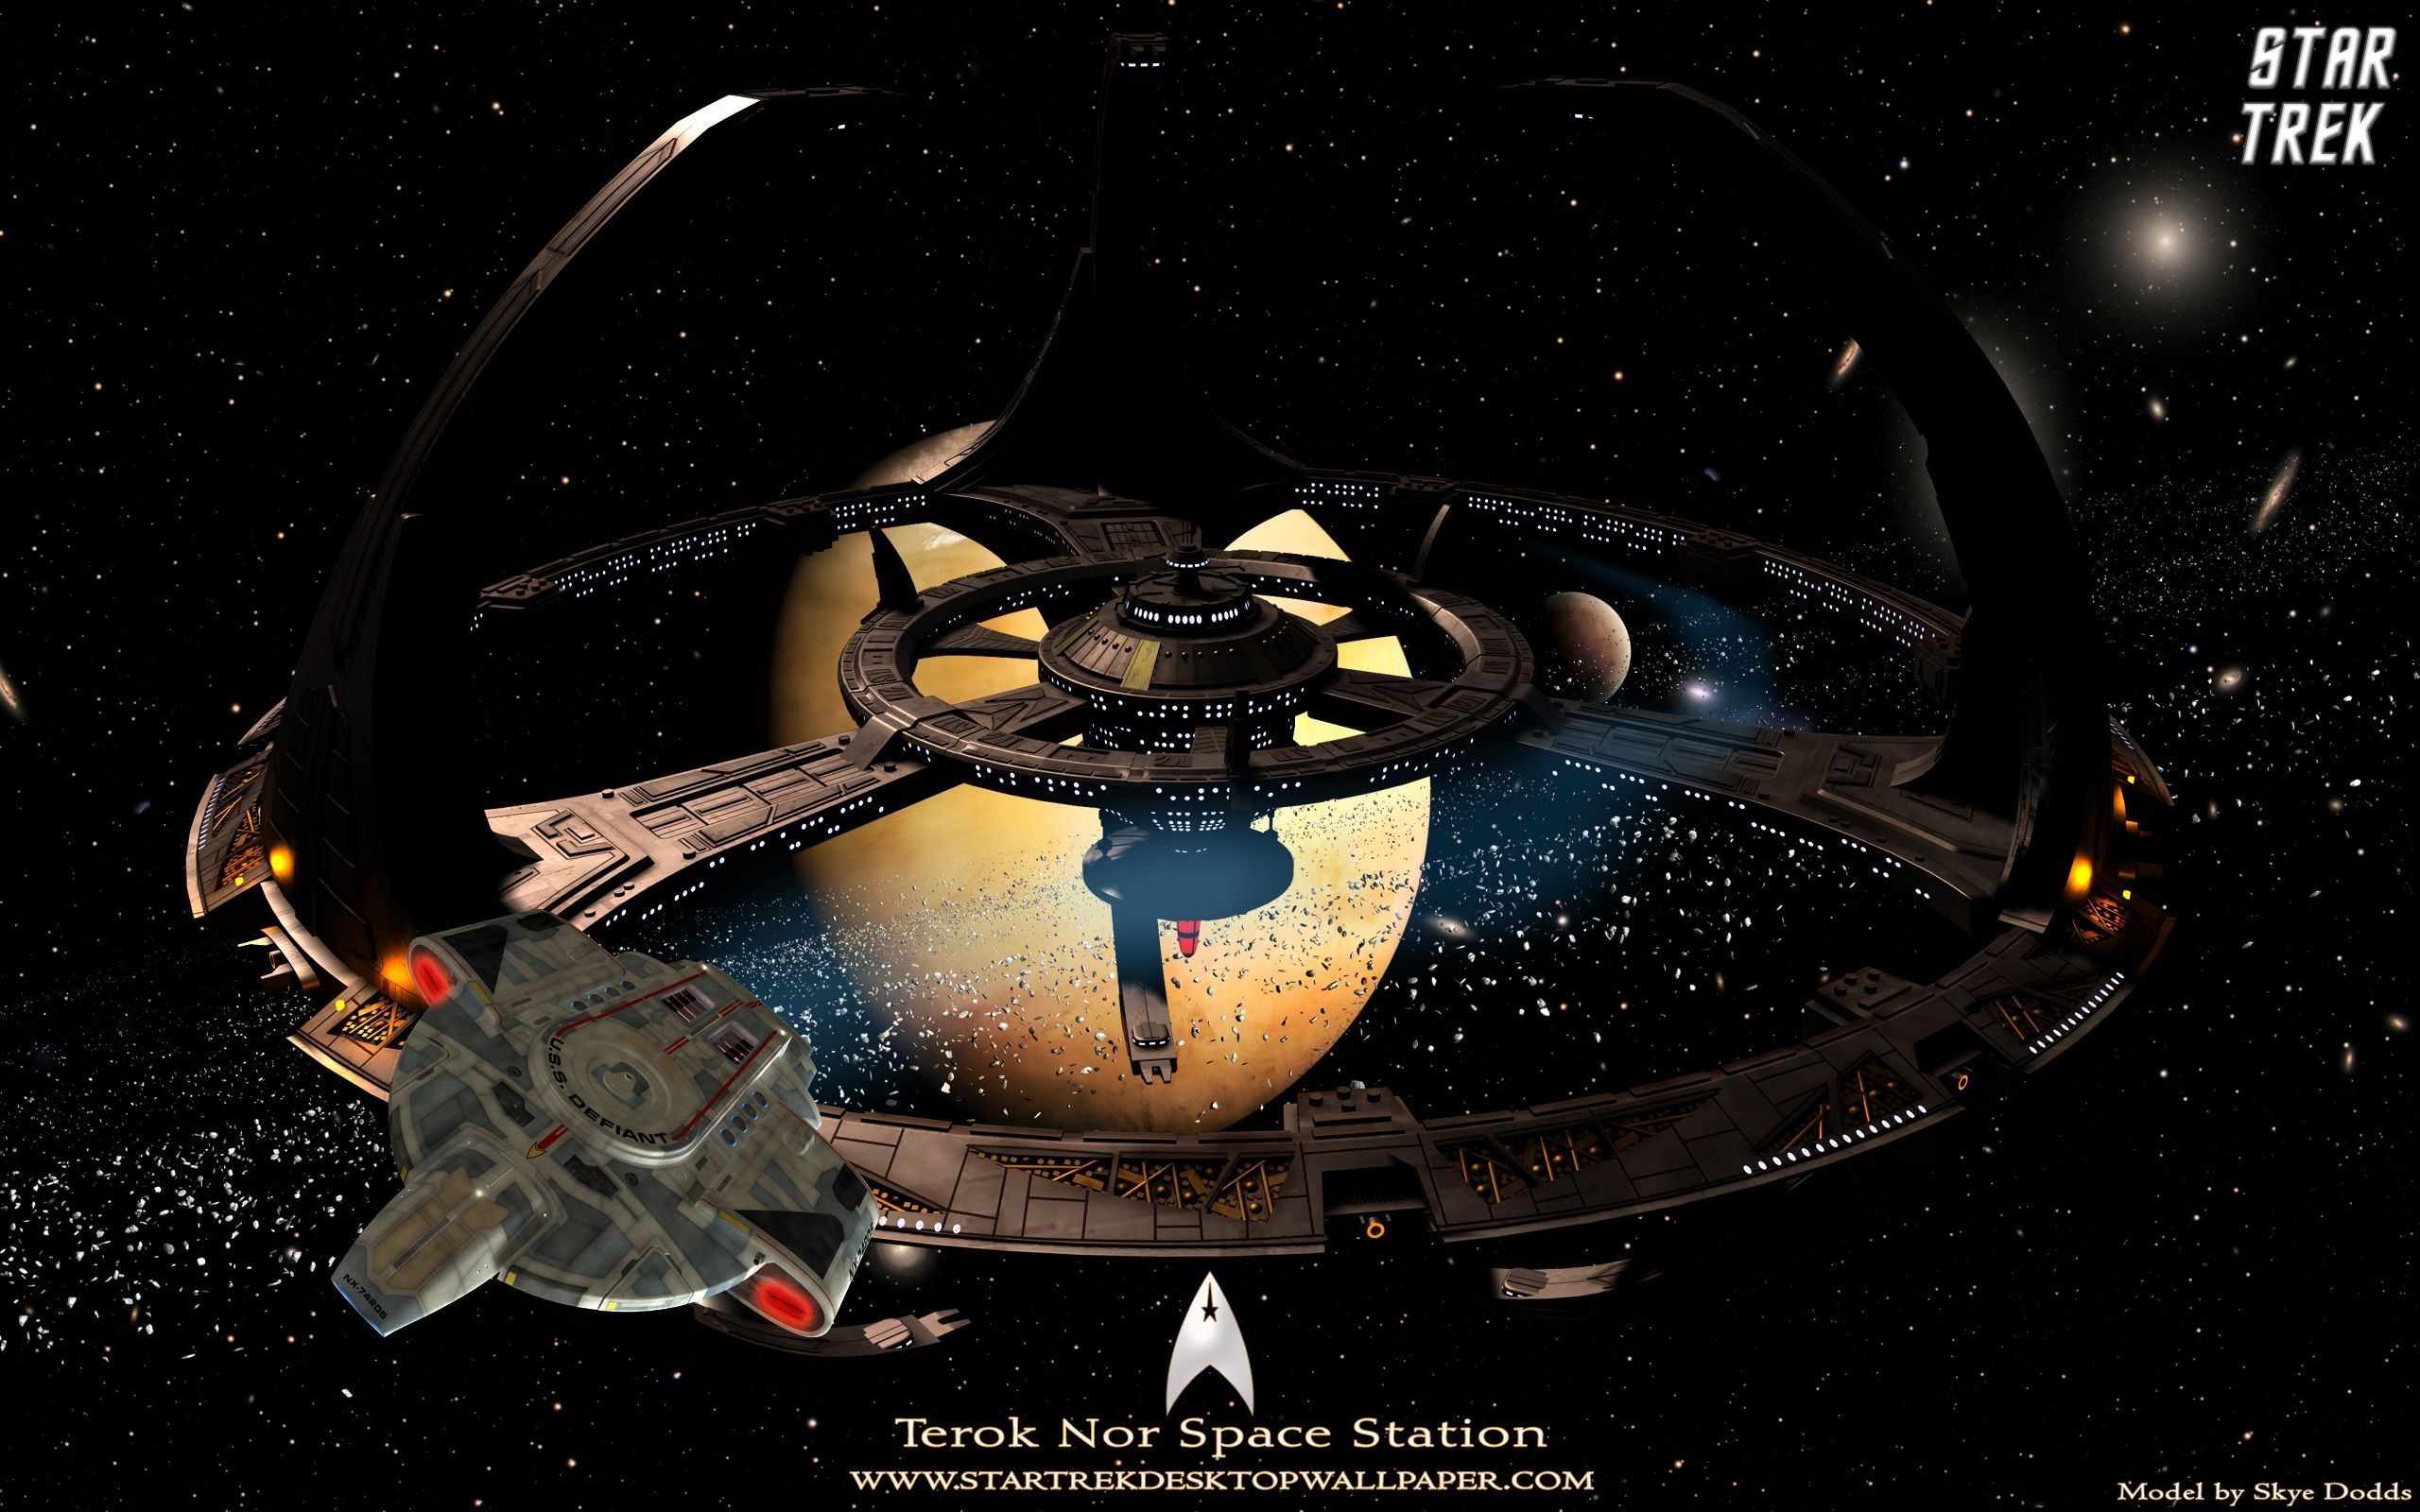 Star Trek Terok Nor Space Station Star Trek computer desktop wallpaper, picture, image. Star trek, Star trek ds New star trek movie